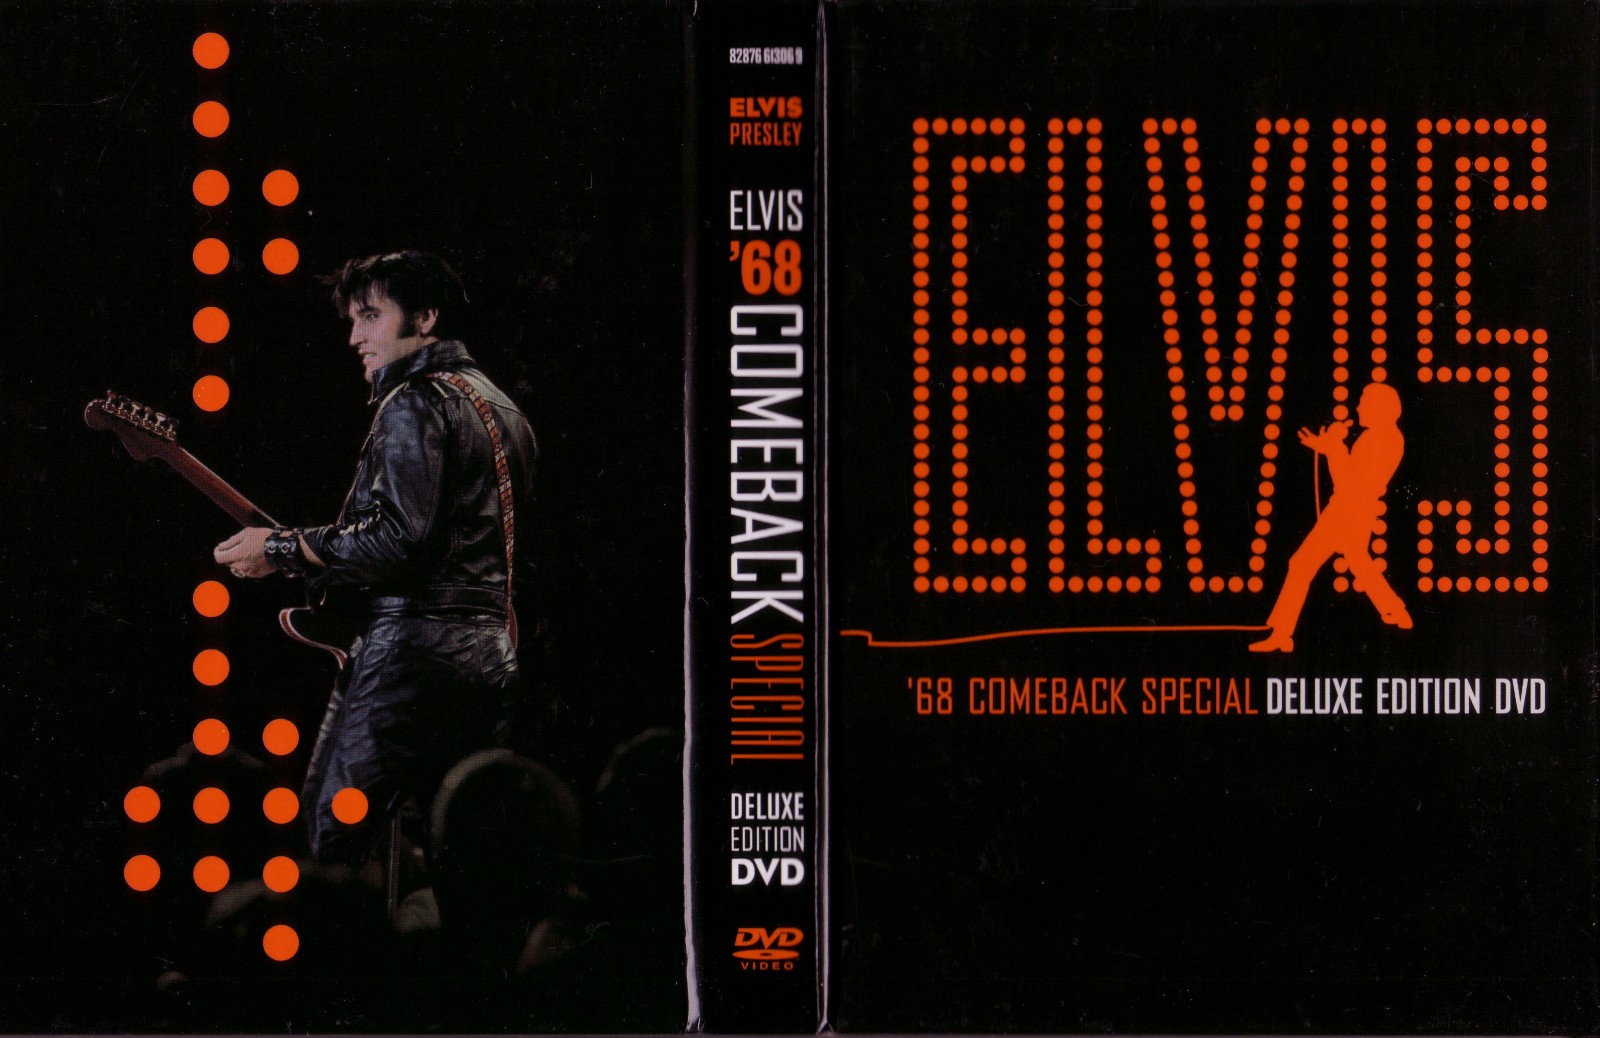 Back special. Элвис Пресли 68 Comeback Special. Камбэк 68 Элвис. Elvis 1968 Comeback. Elvis Presley - Elvis: '68 Comeback Special (Deluxe Edition).